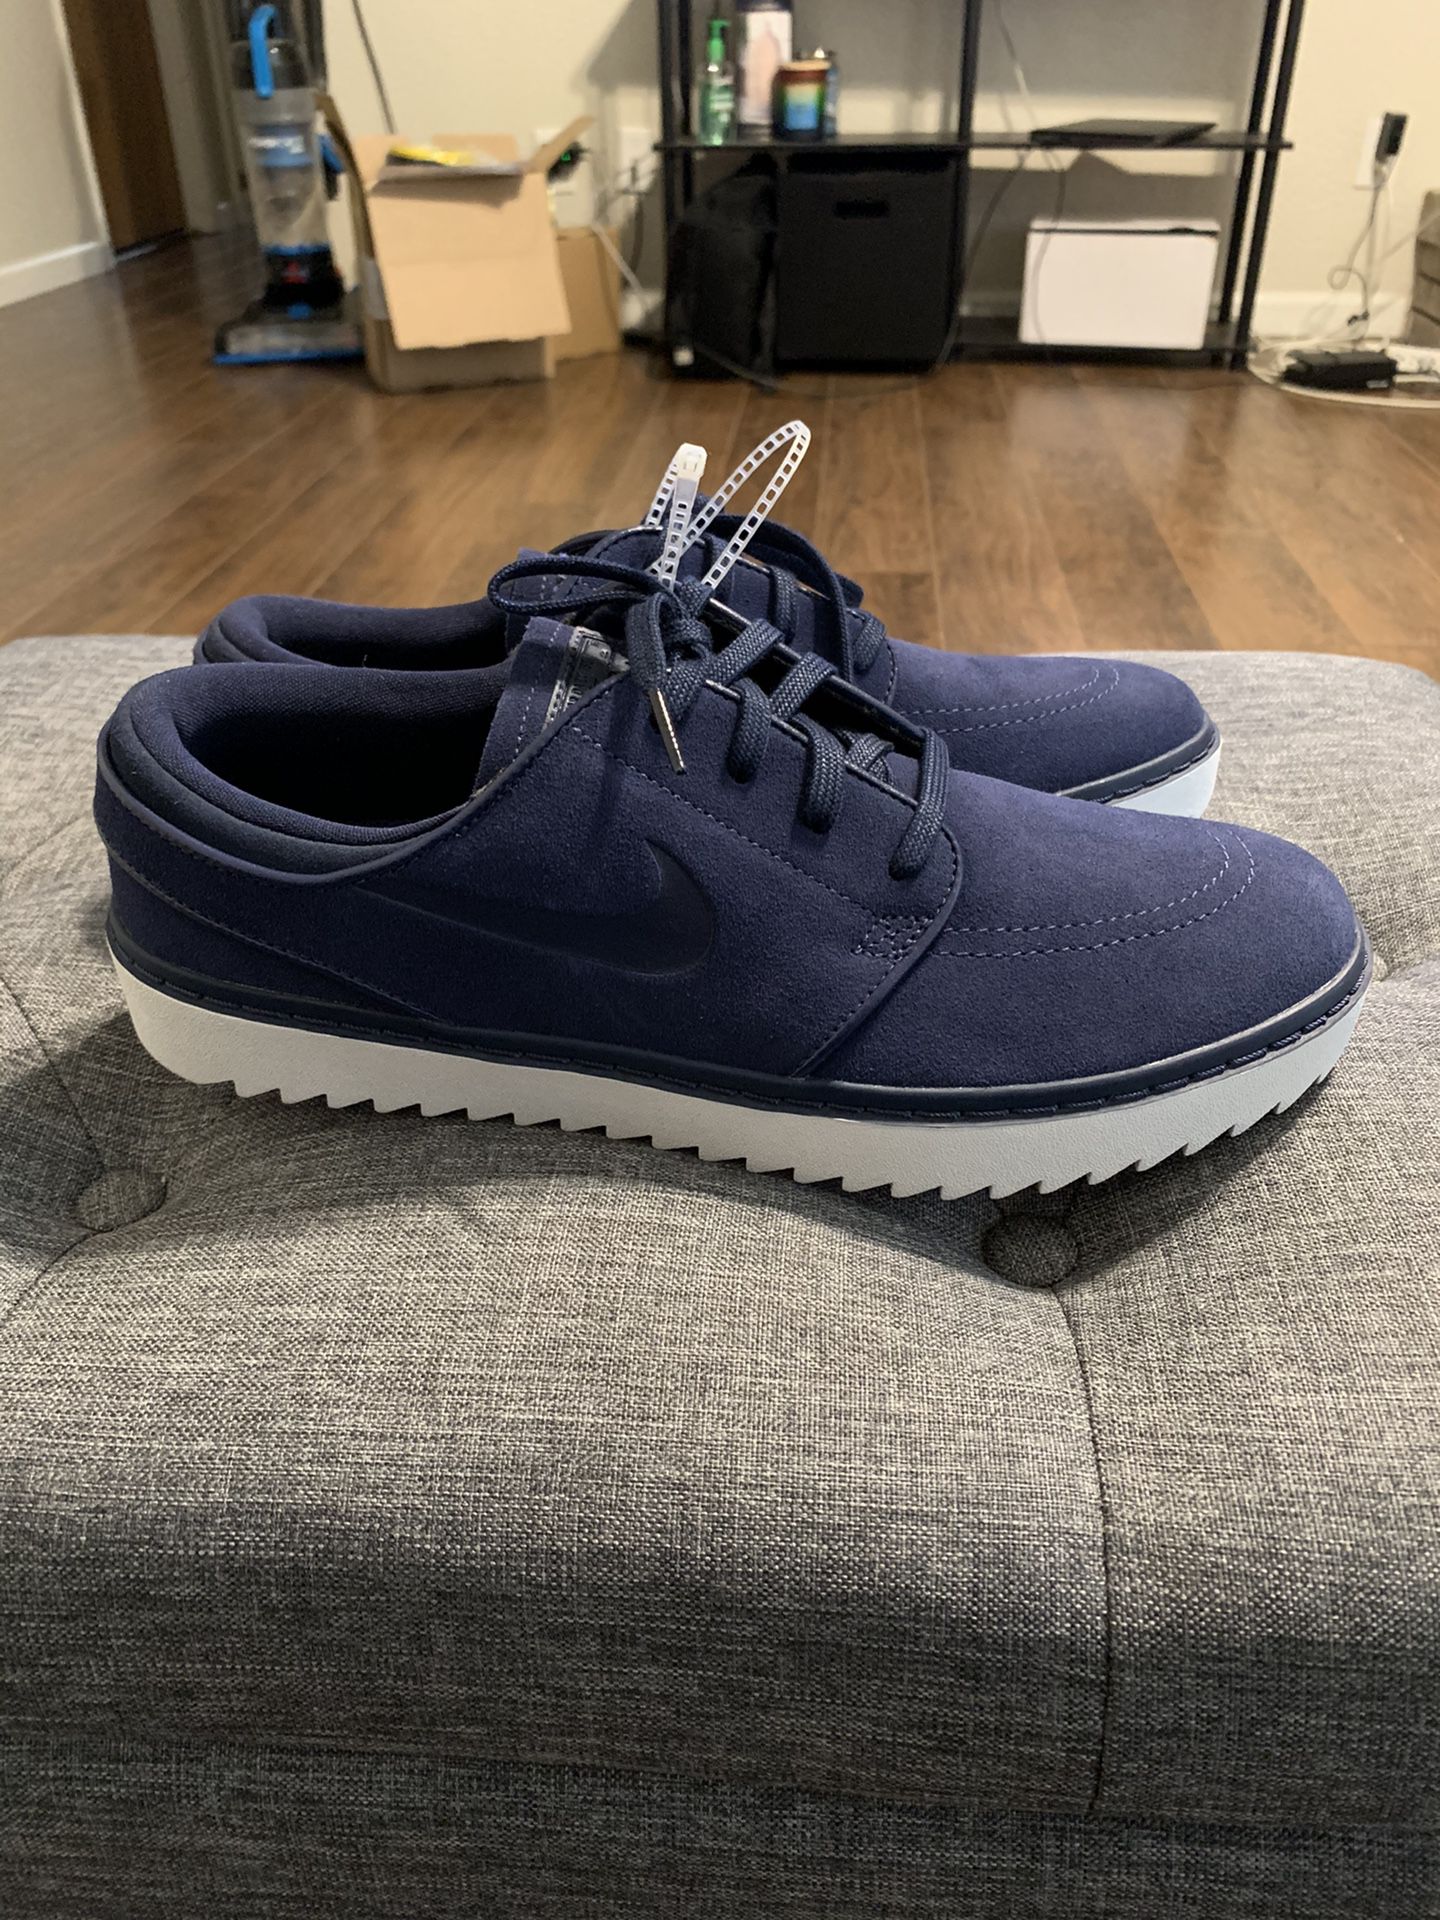 Nike Janoski G Navy Blue Suede Spikeless Golf Shoes